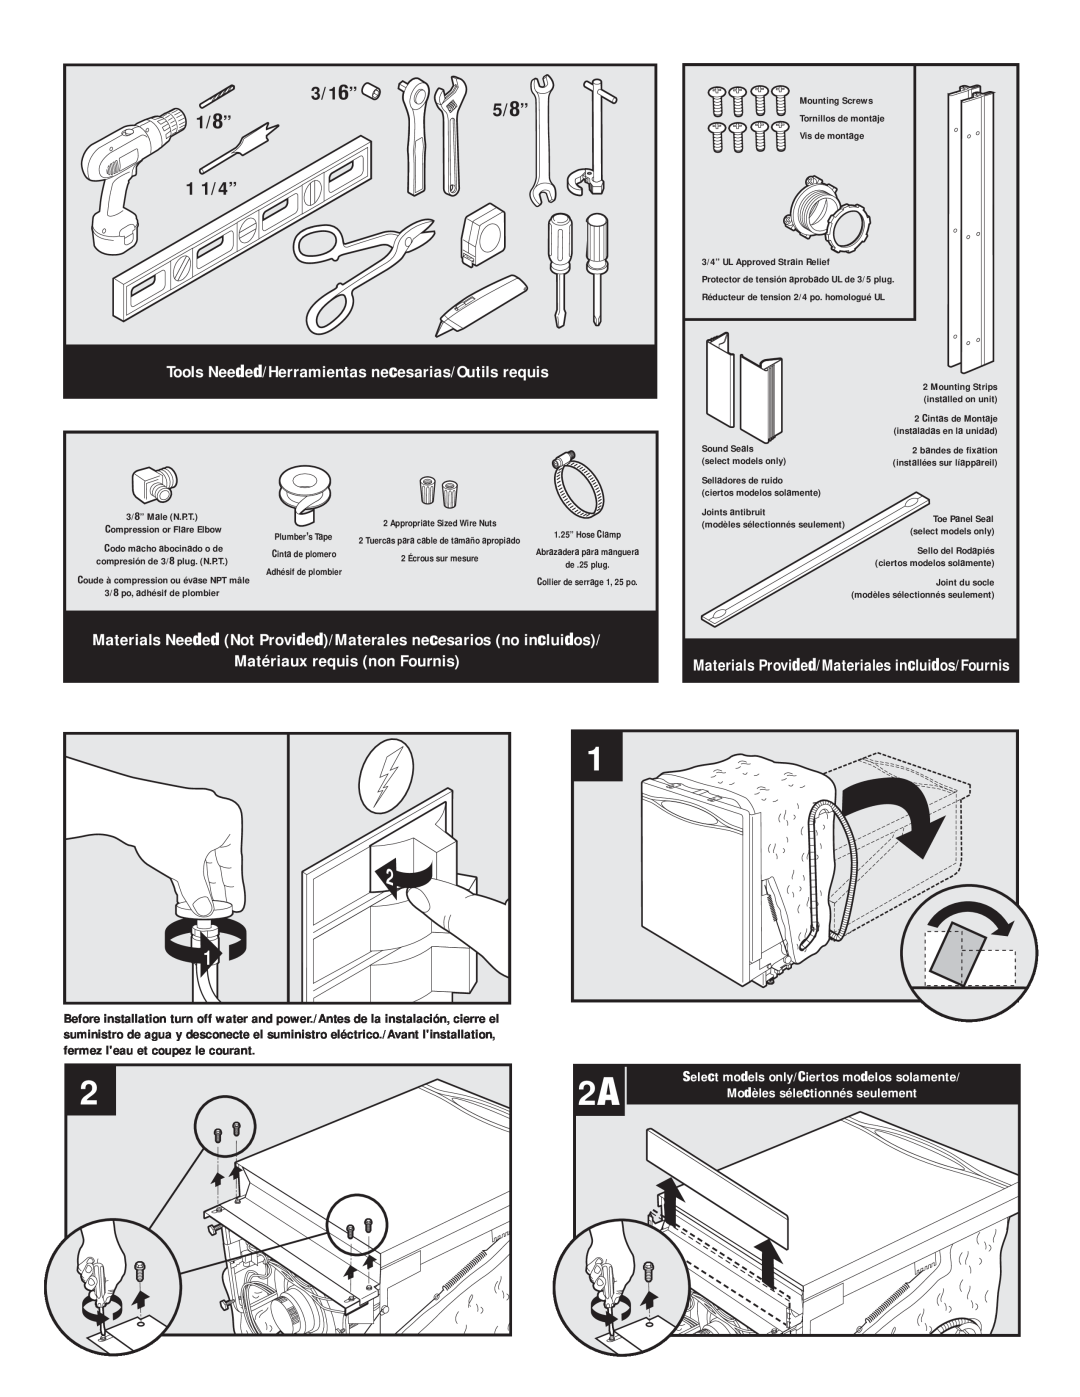 Maytag Dishwasher installation instructions 1/8”, 3/16”, 5/8”, 1 1/4”, Tools Needed/Herramientas necesarias/Outils requis 